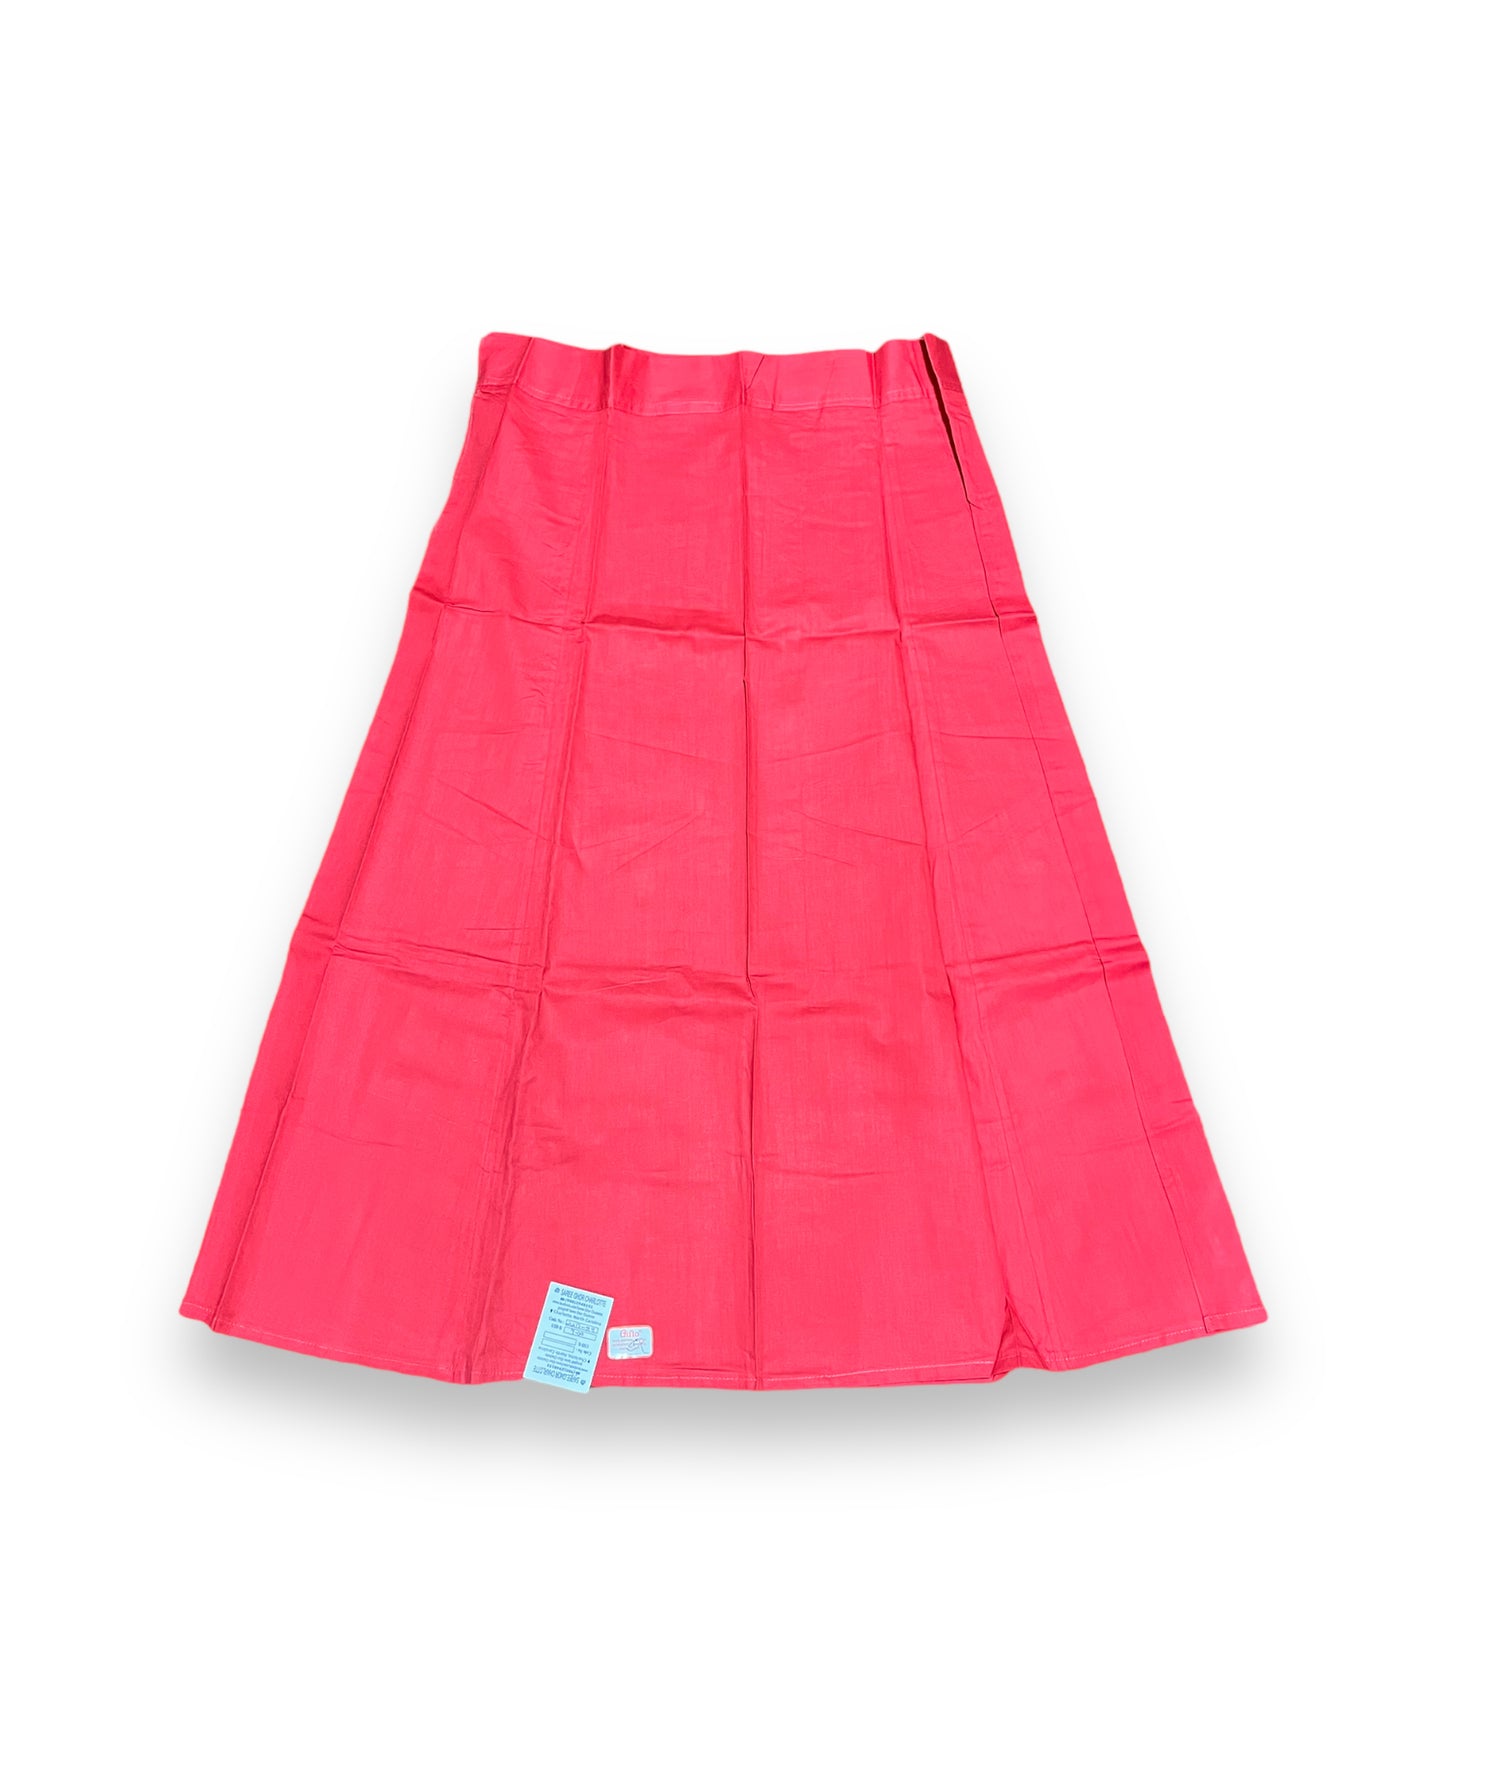 Essential Plain Cotton Petticoat for Women -01 – Saree Ghor Charlotte